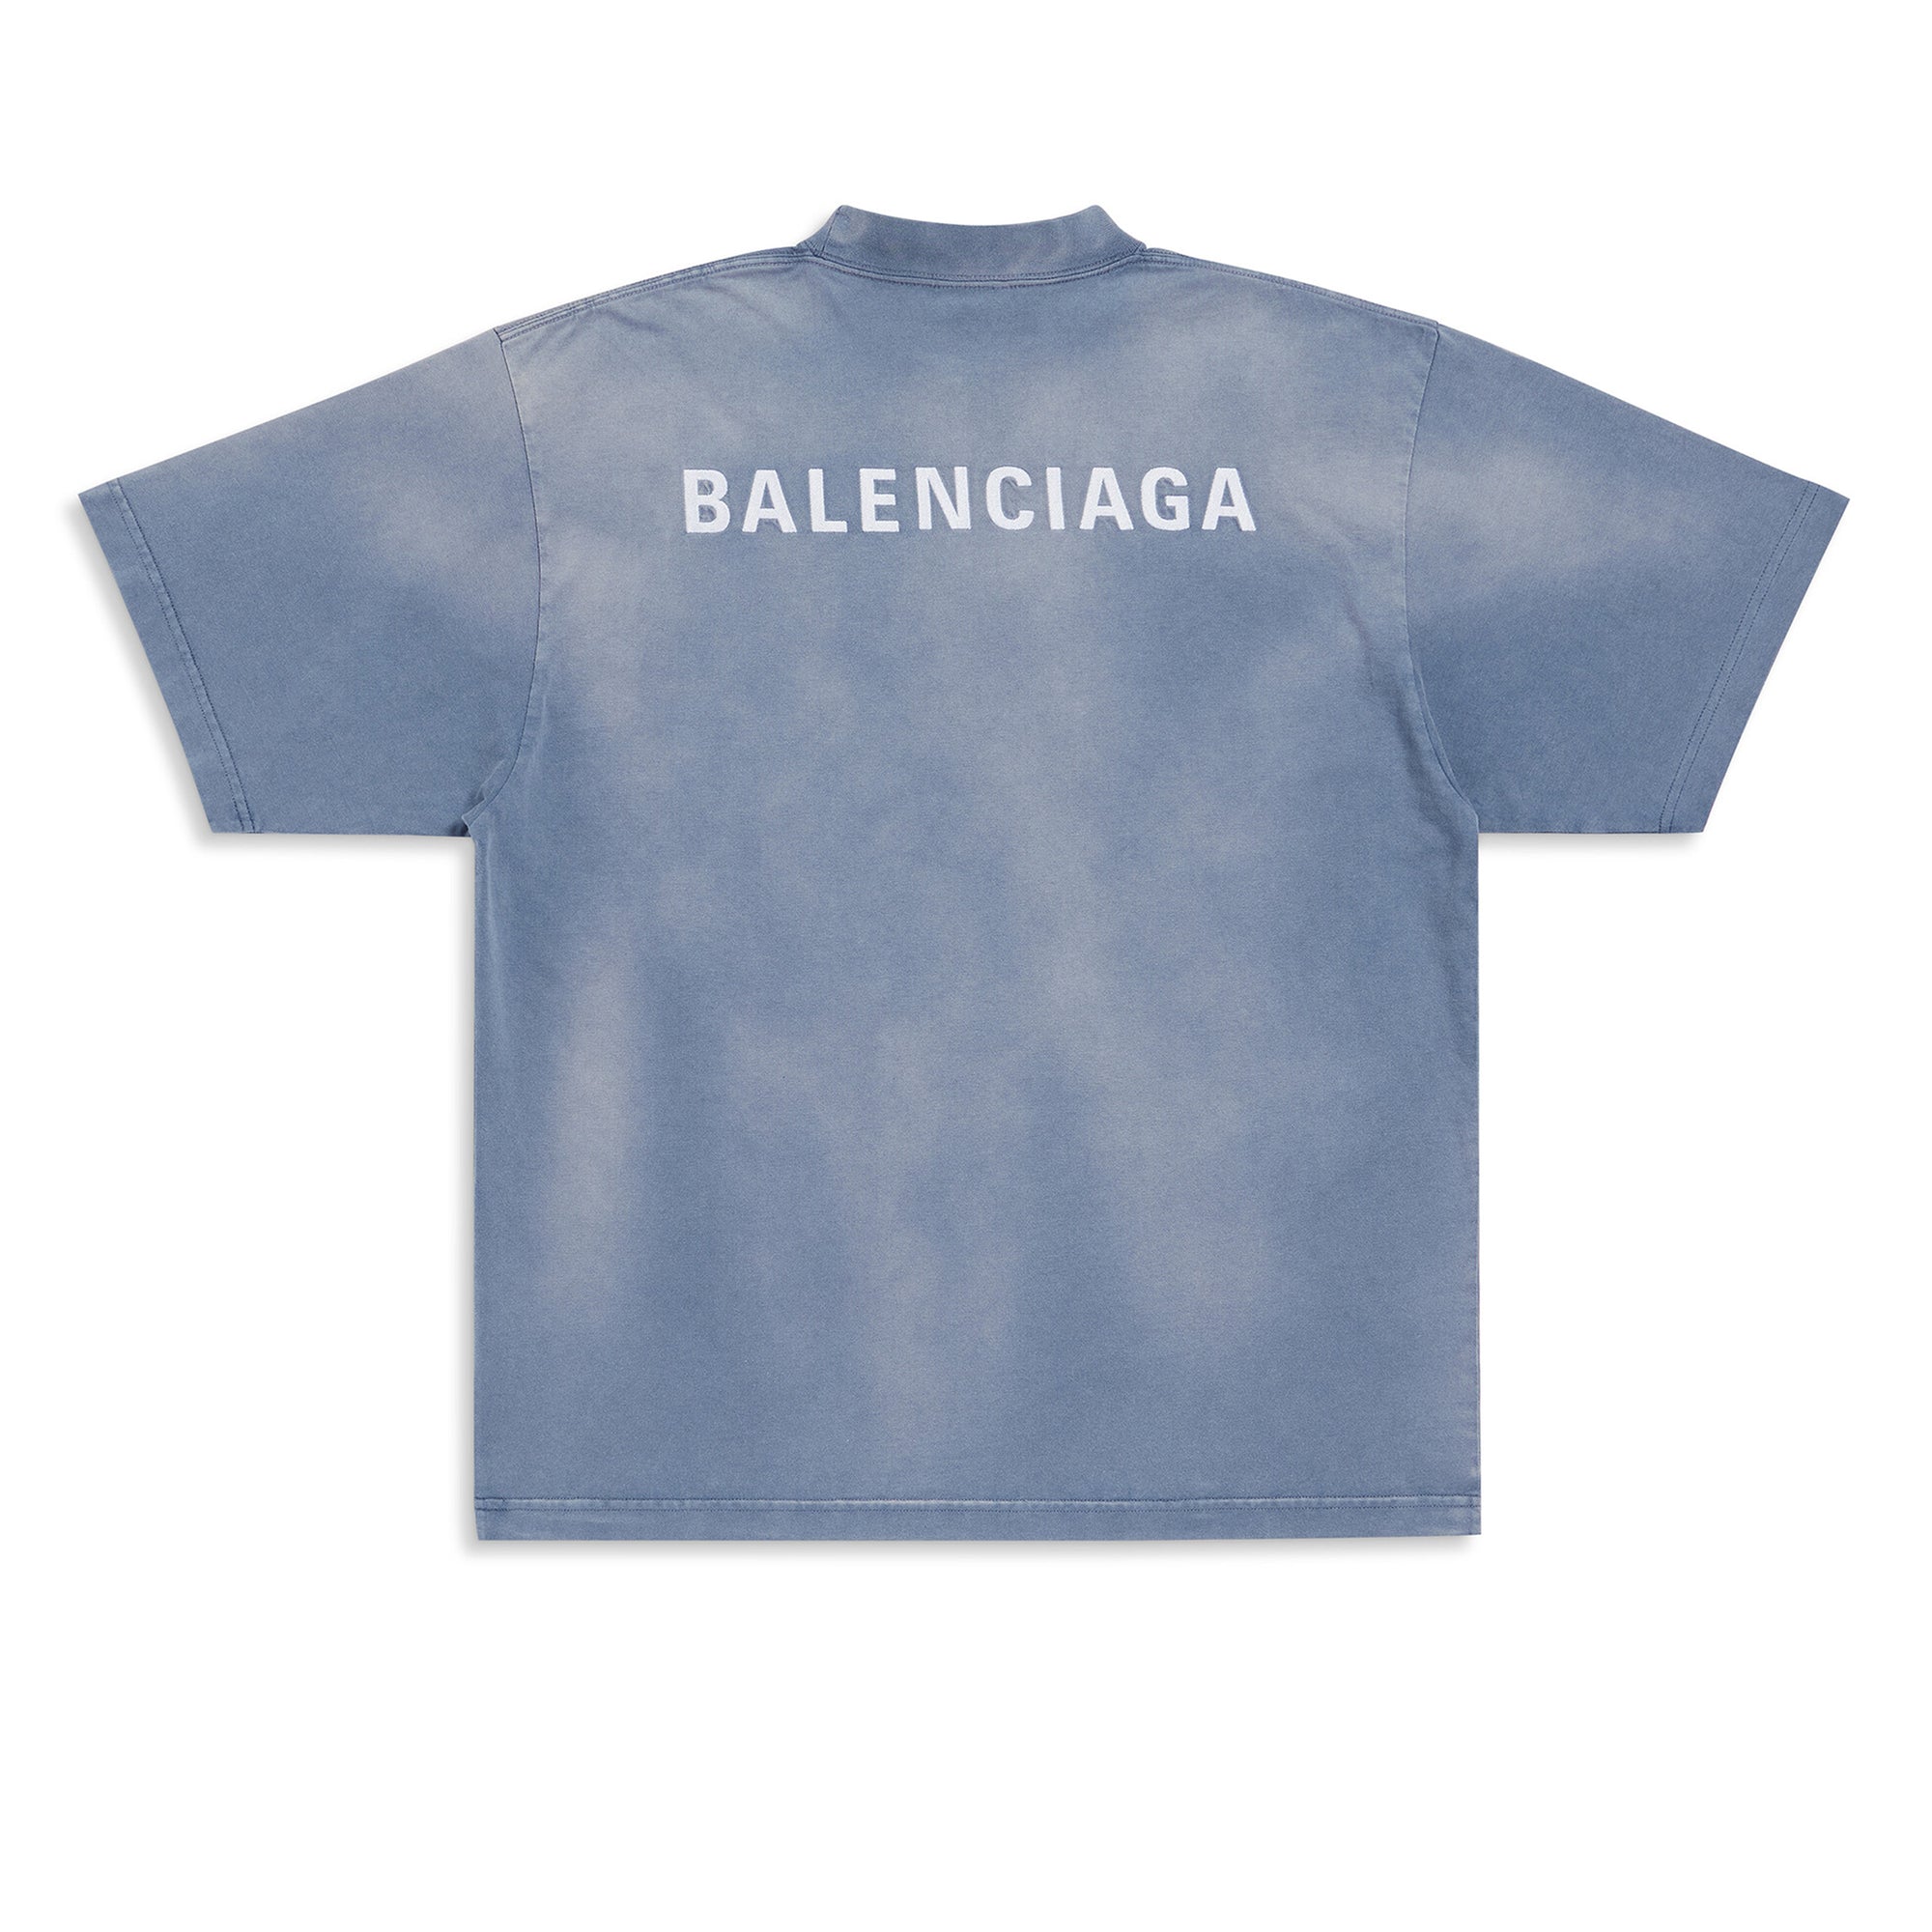 Balenciaga - Men’s Medium Fit T-Shirt - (Faded Blue/White) view 2